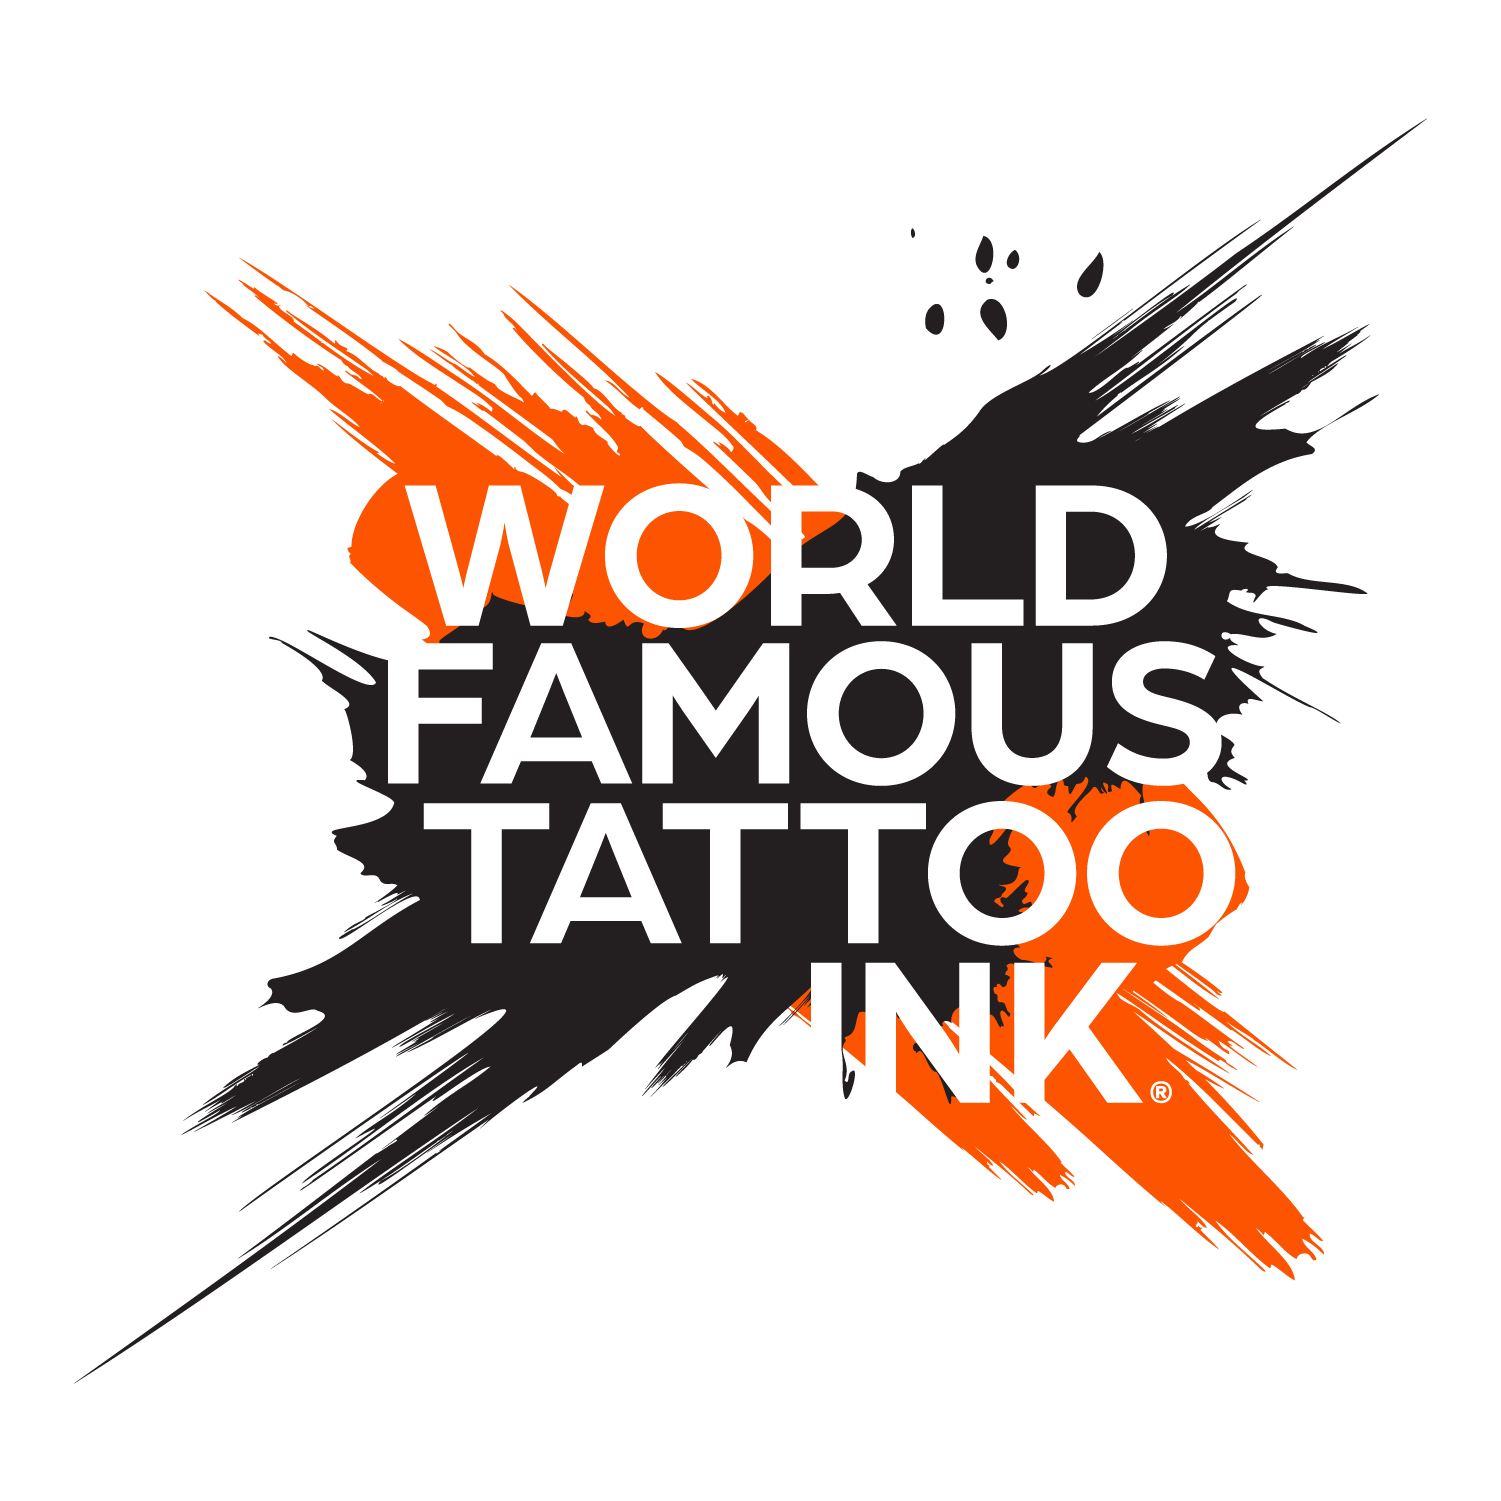 All Tattoo Inks, Ensemble World Famous Tattoo Ink Set World Famous Alex  Santucci Skin Tones Cover Up 4x30ml •